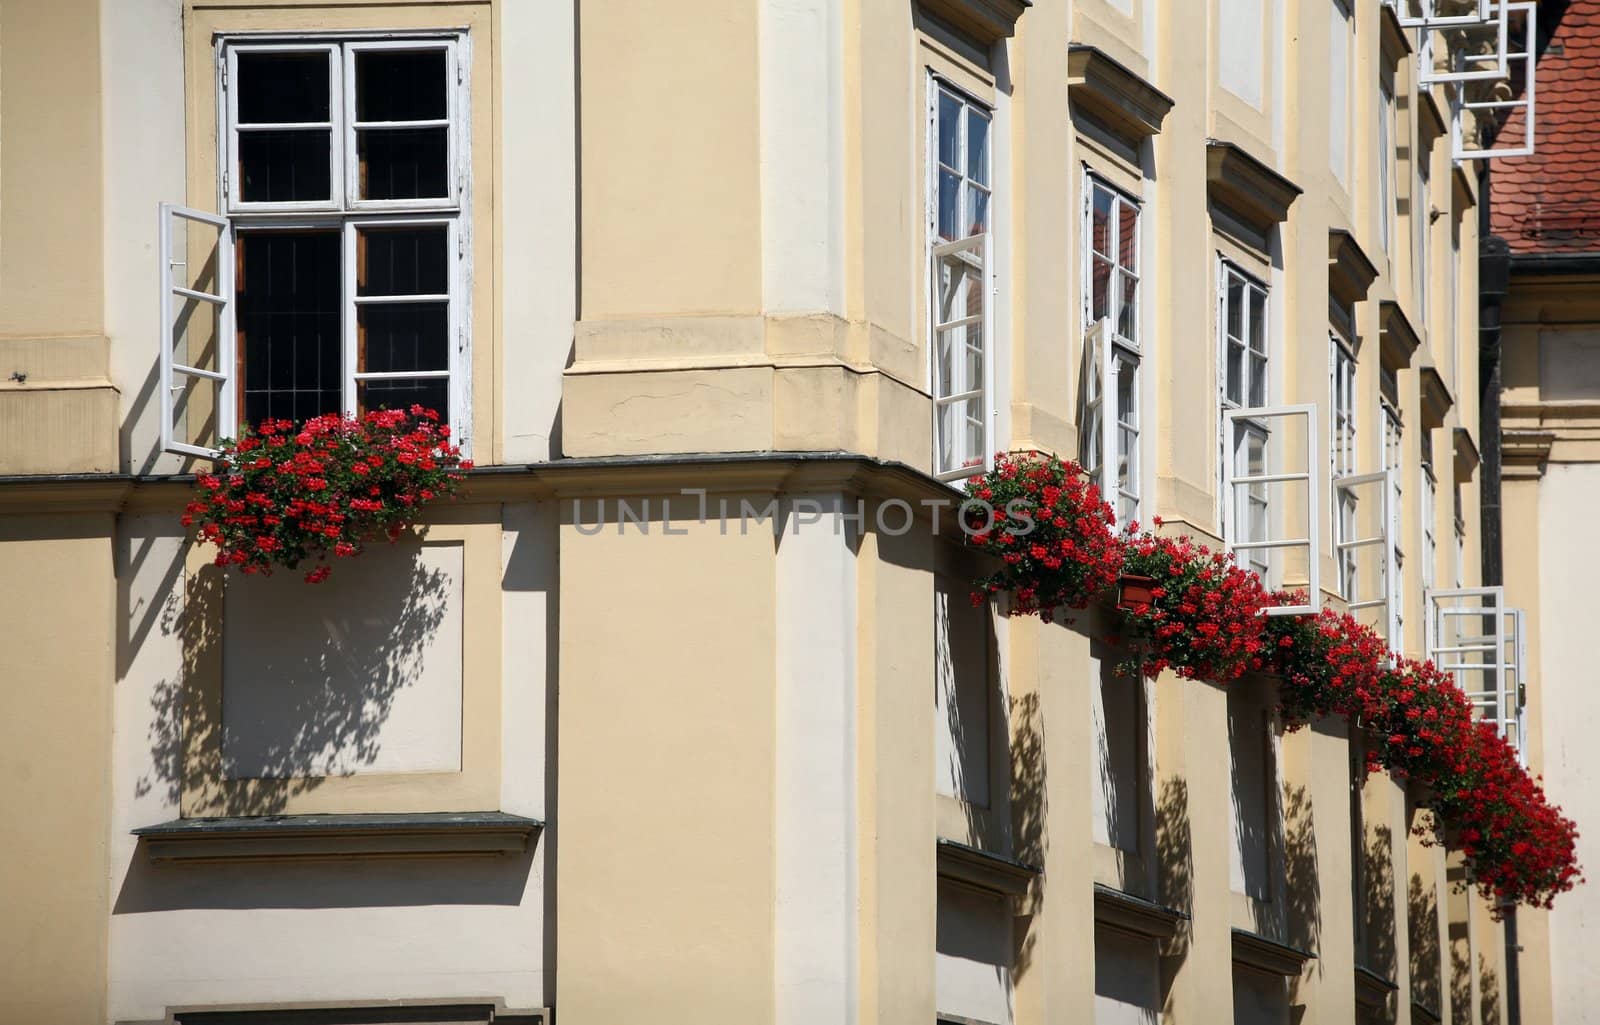 Windows on historical building with geranium decoration